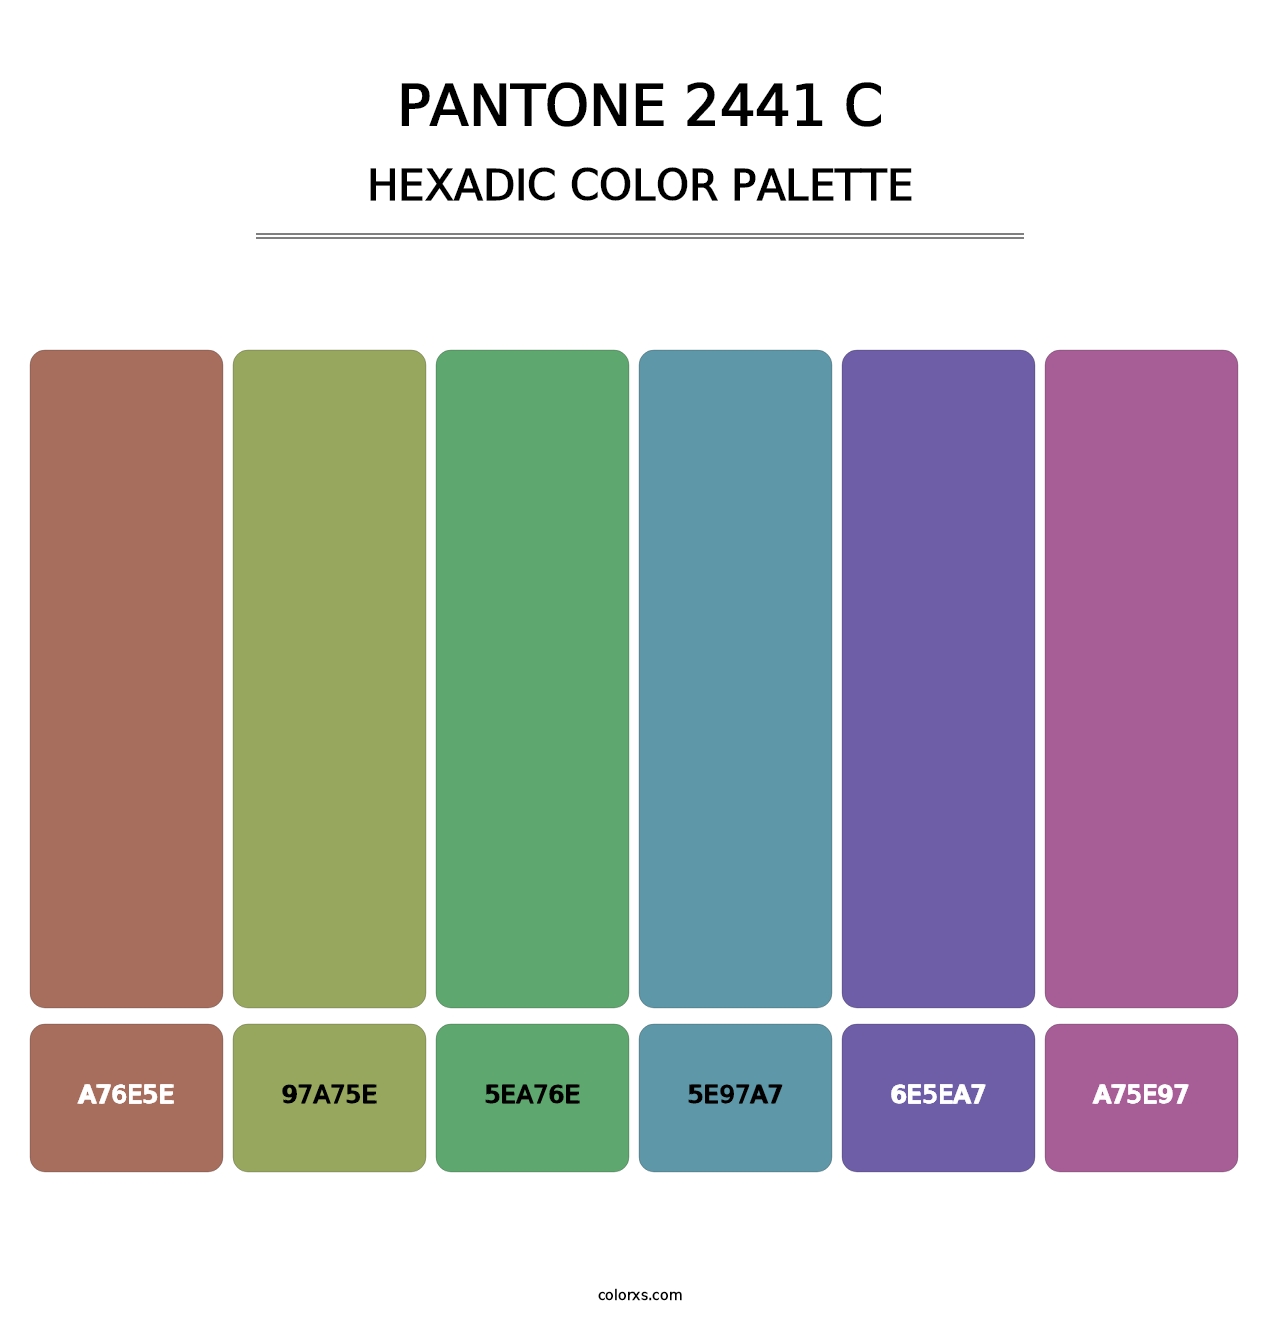 PANTONE 2441 C - Hexadic Color Palette